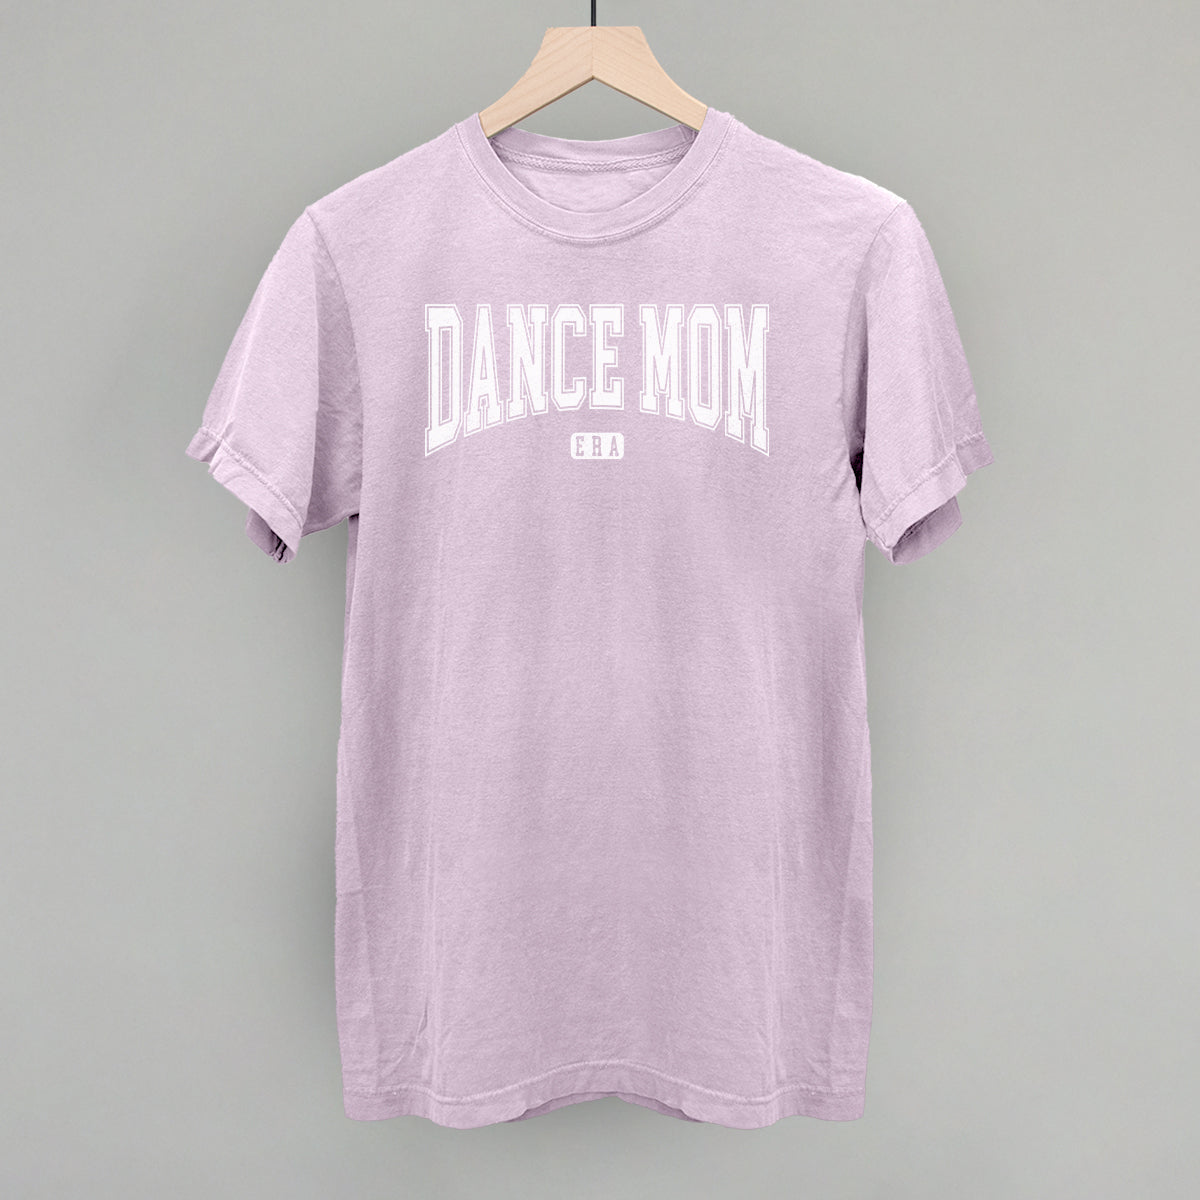 Dance Mom Era